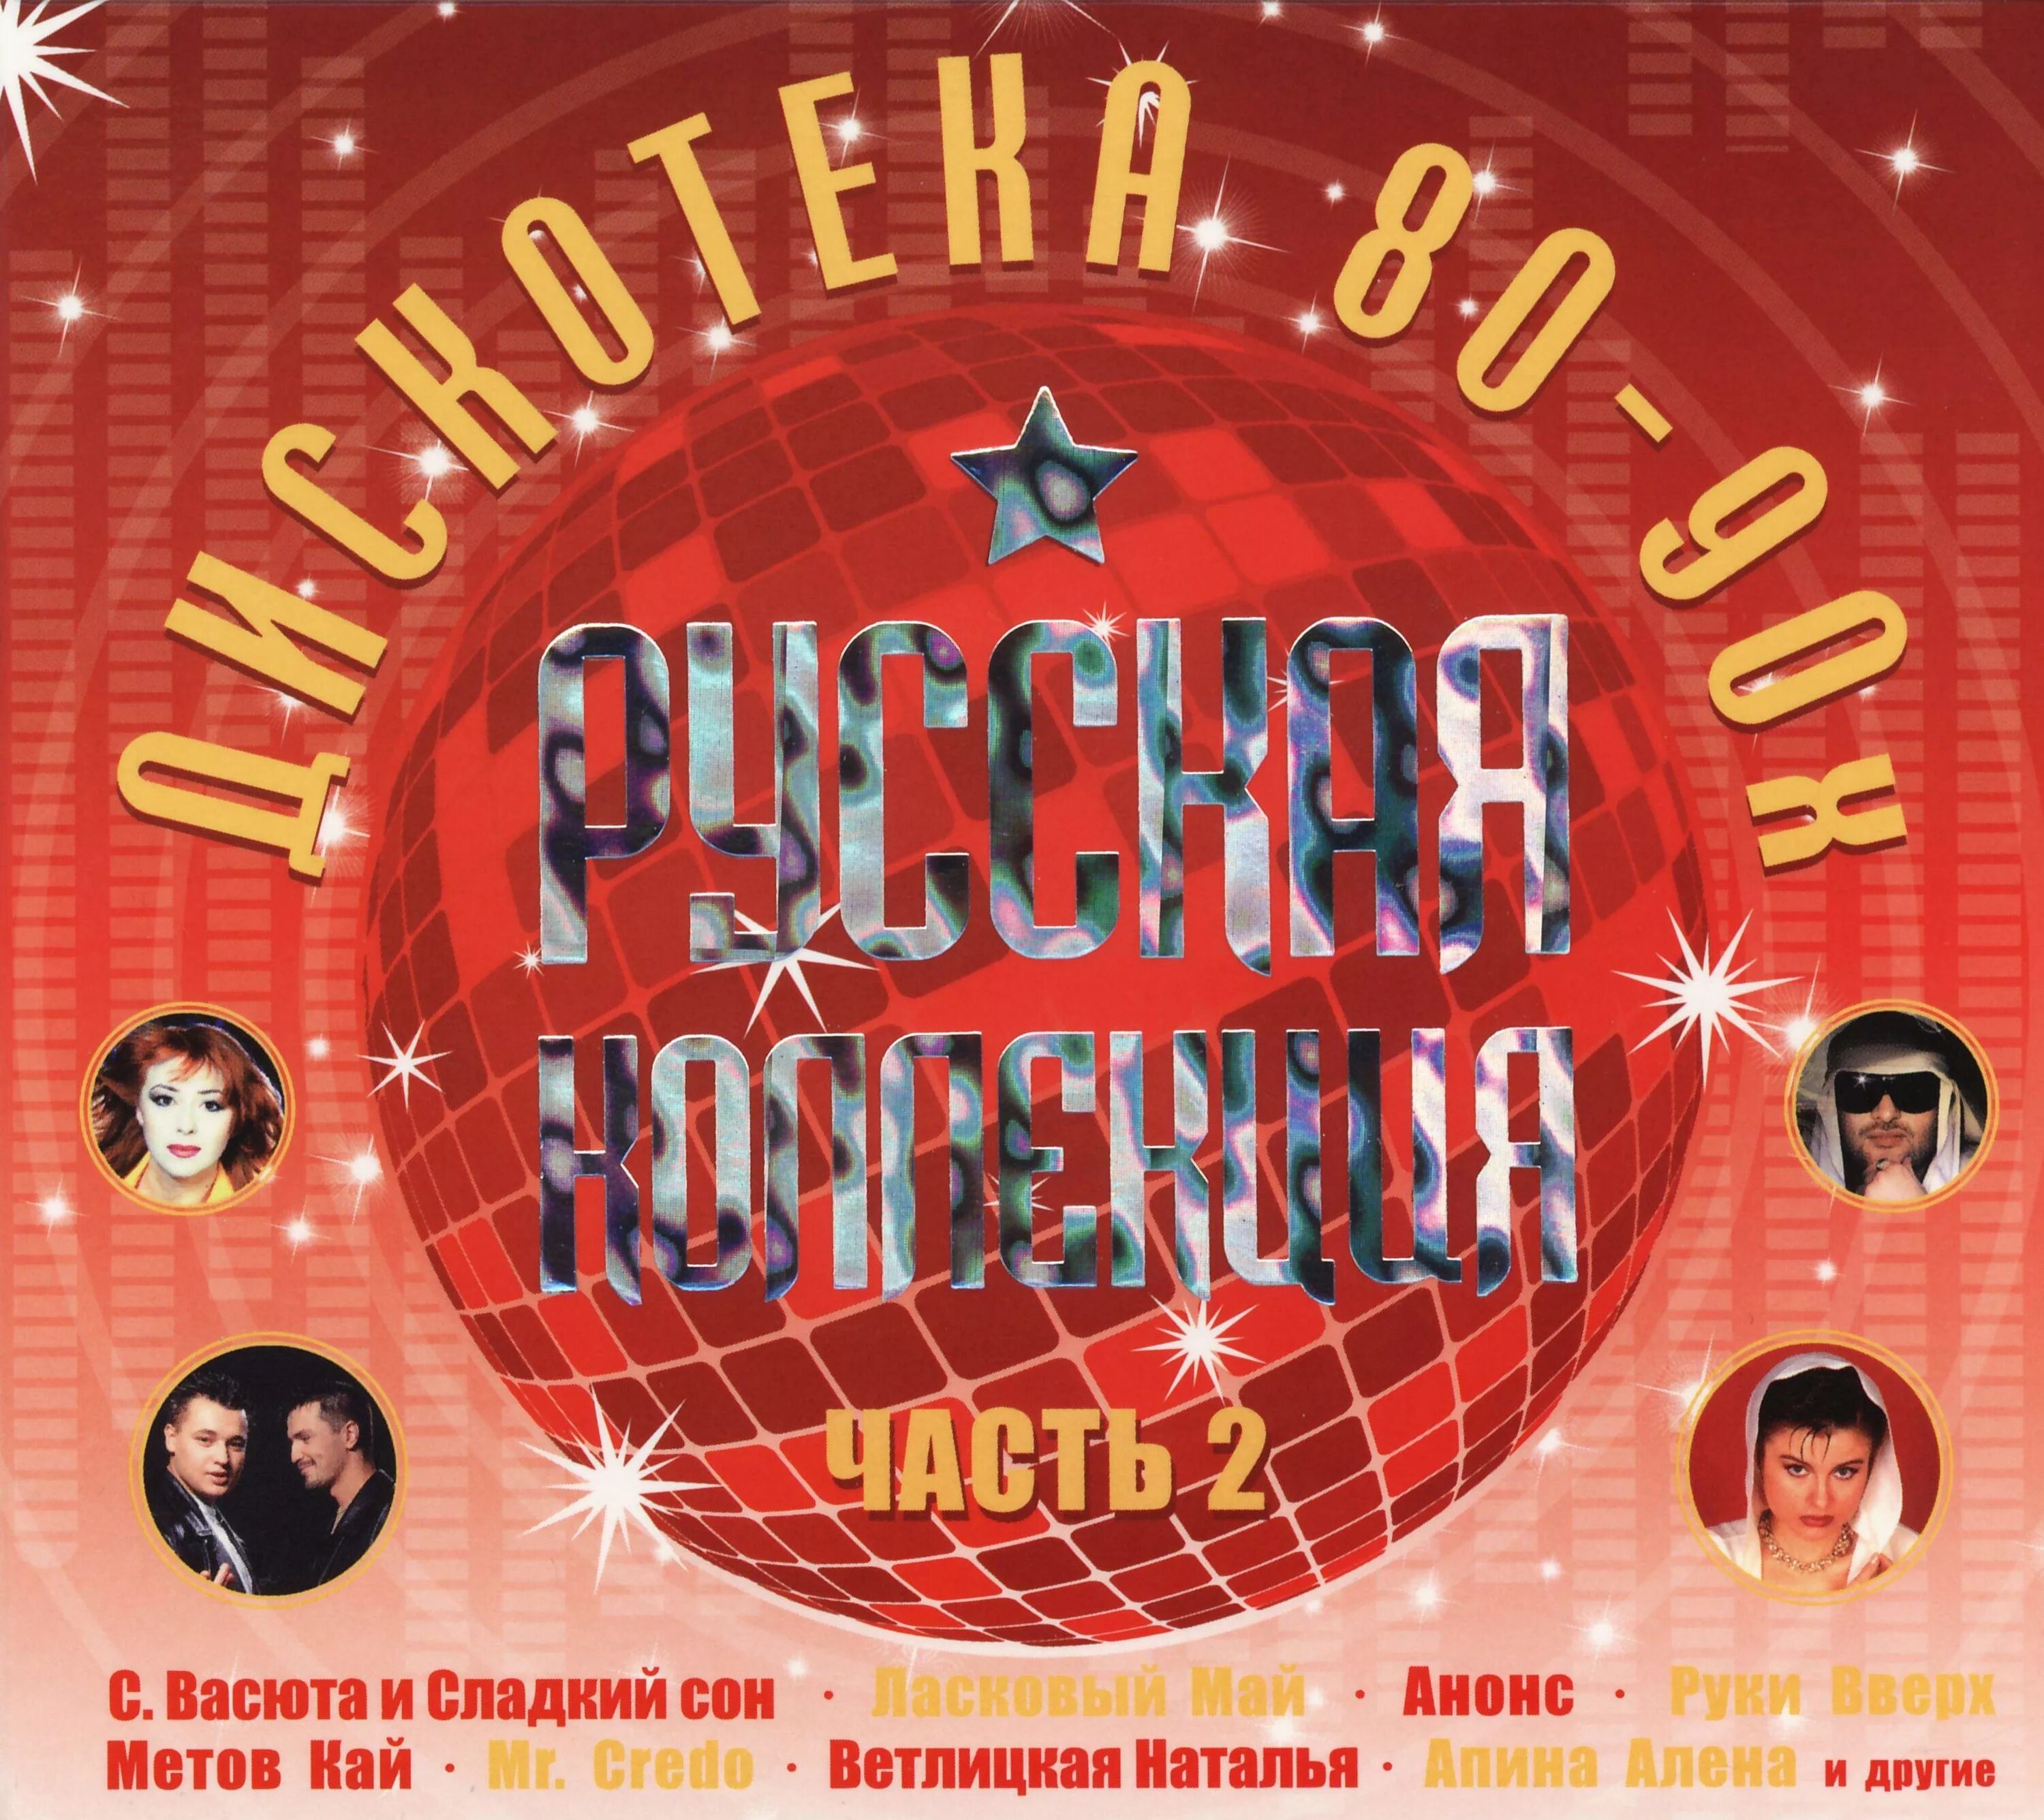 Музыкальный диск 90-х. Дискотека 80-х. Диск русская дискотека 80-х. Сборник дискотеки 80-90-х.